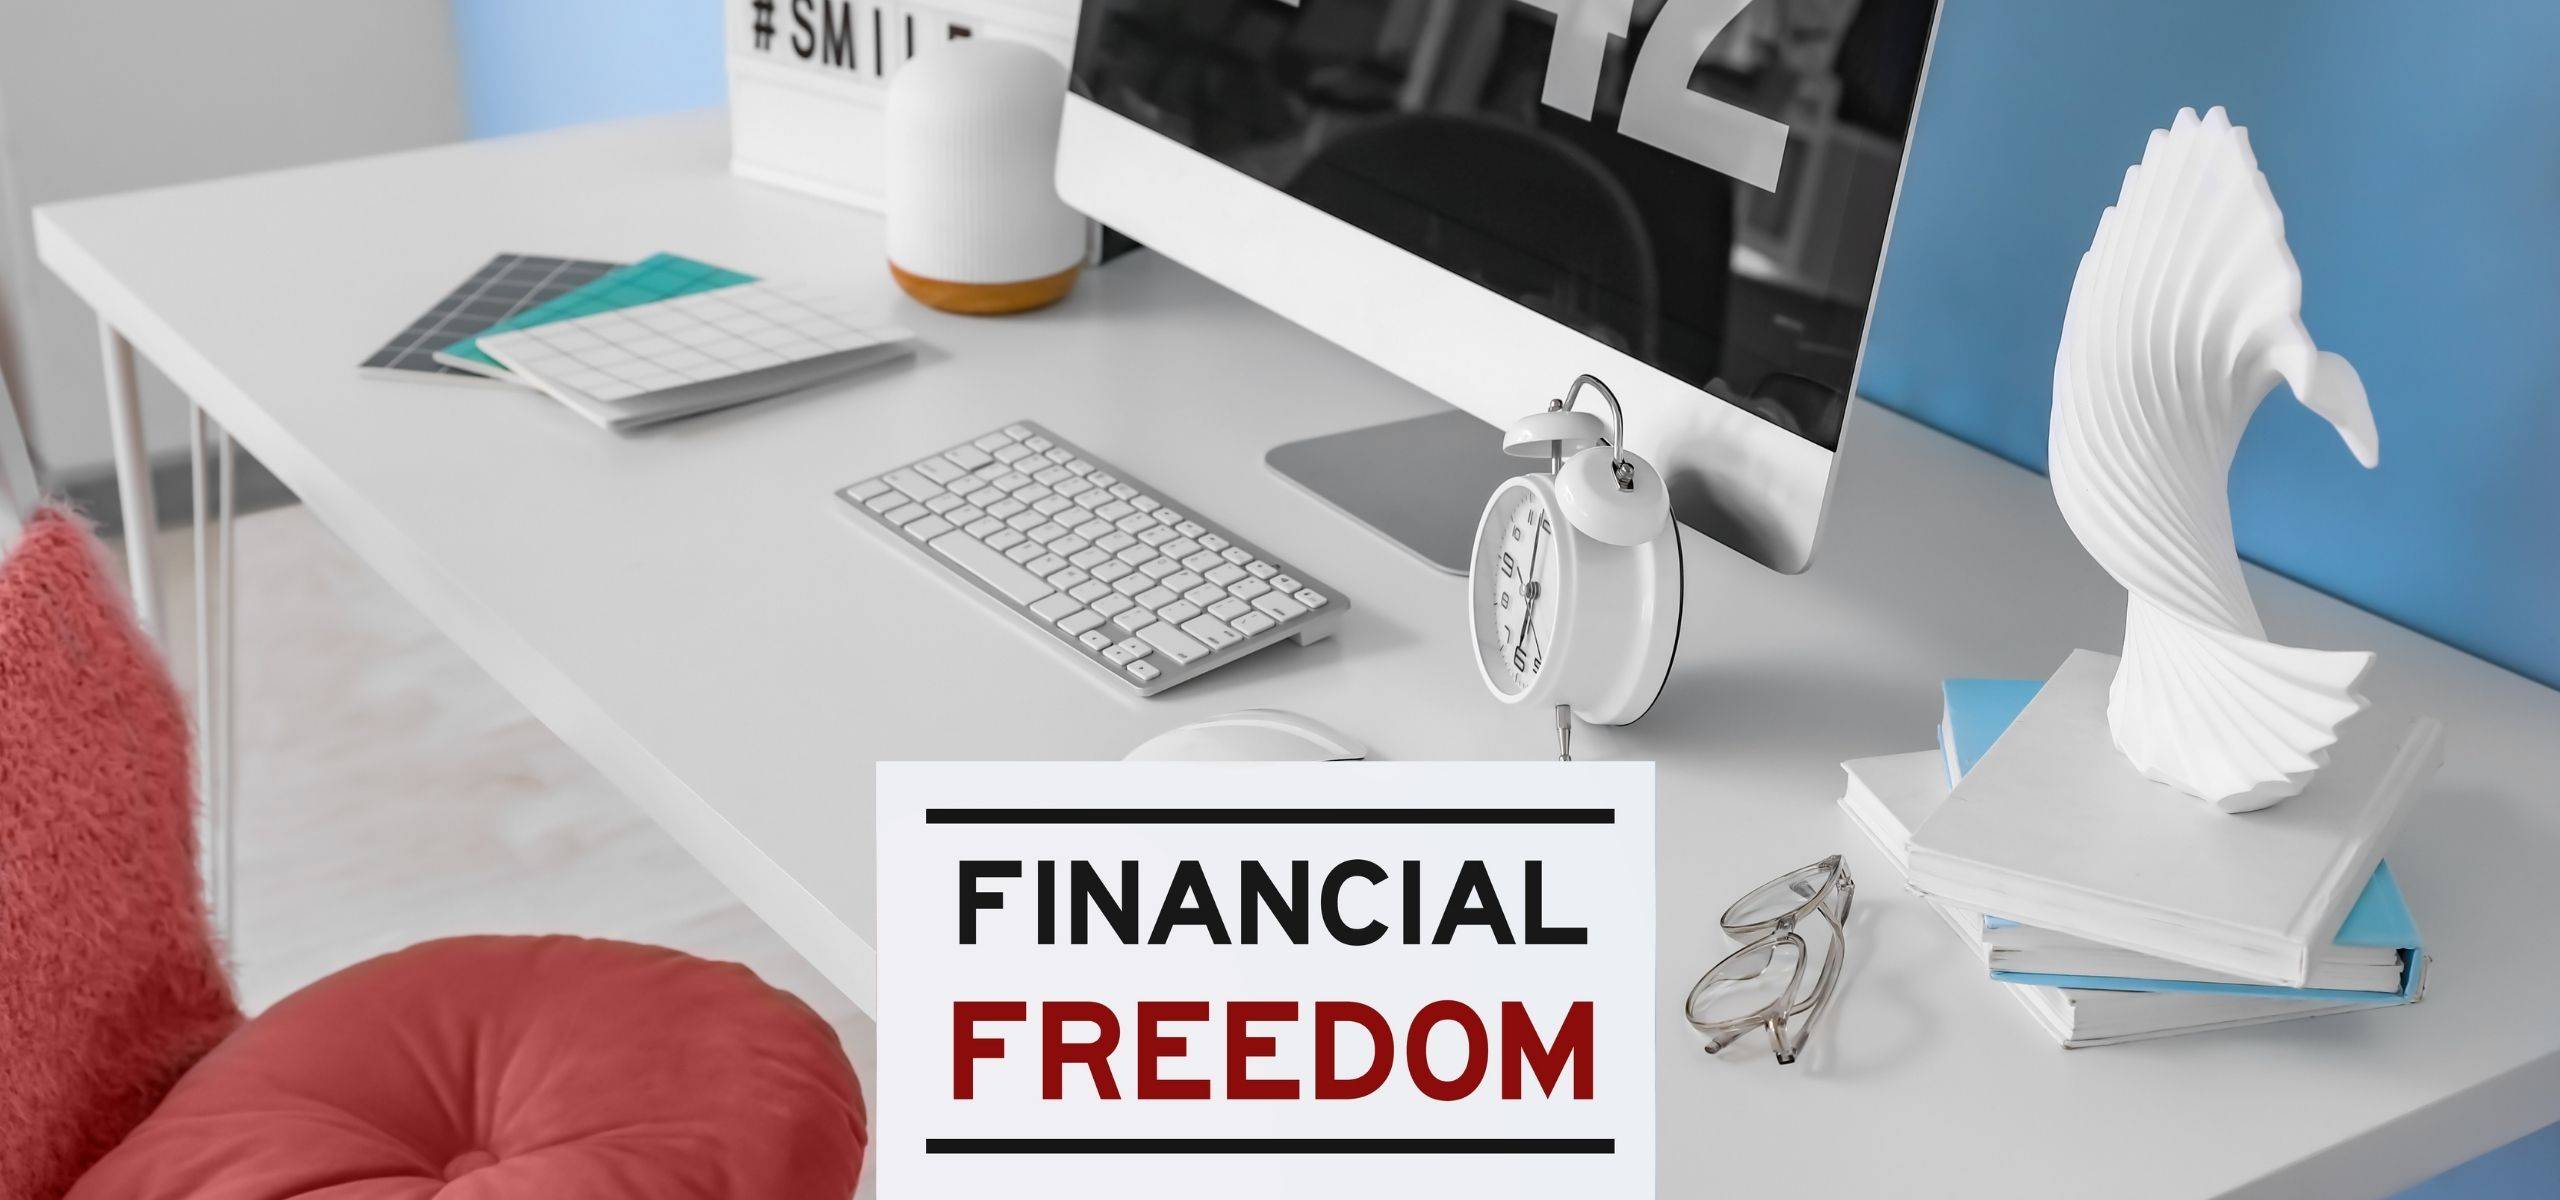 financial freedom with smartlifepicks